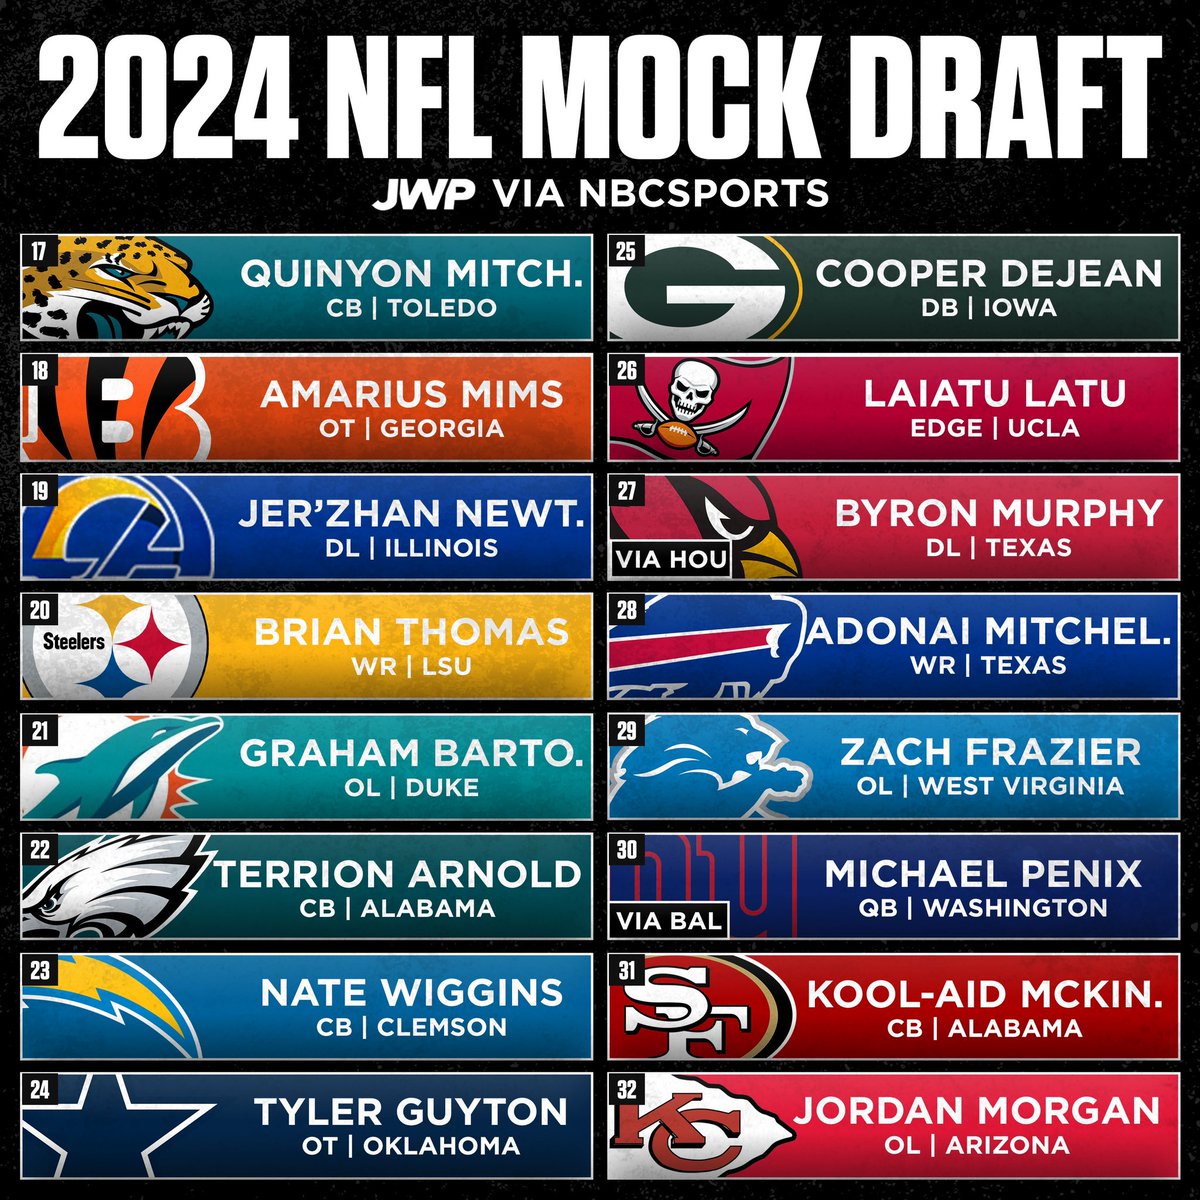 NFL Draft Mock Draft via NBC Sports. 👀 @CFBAlerts_ @JWPsports